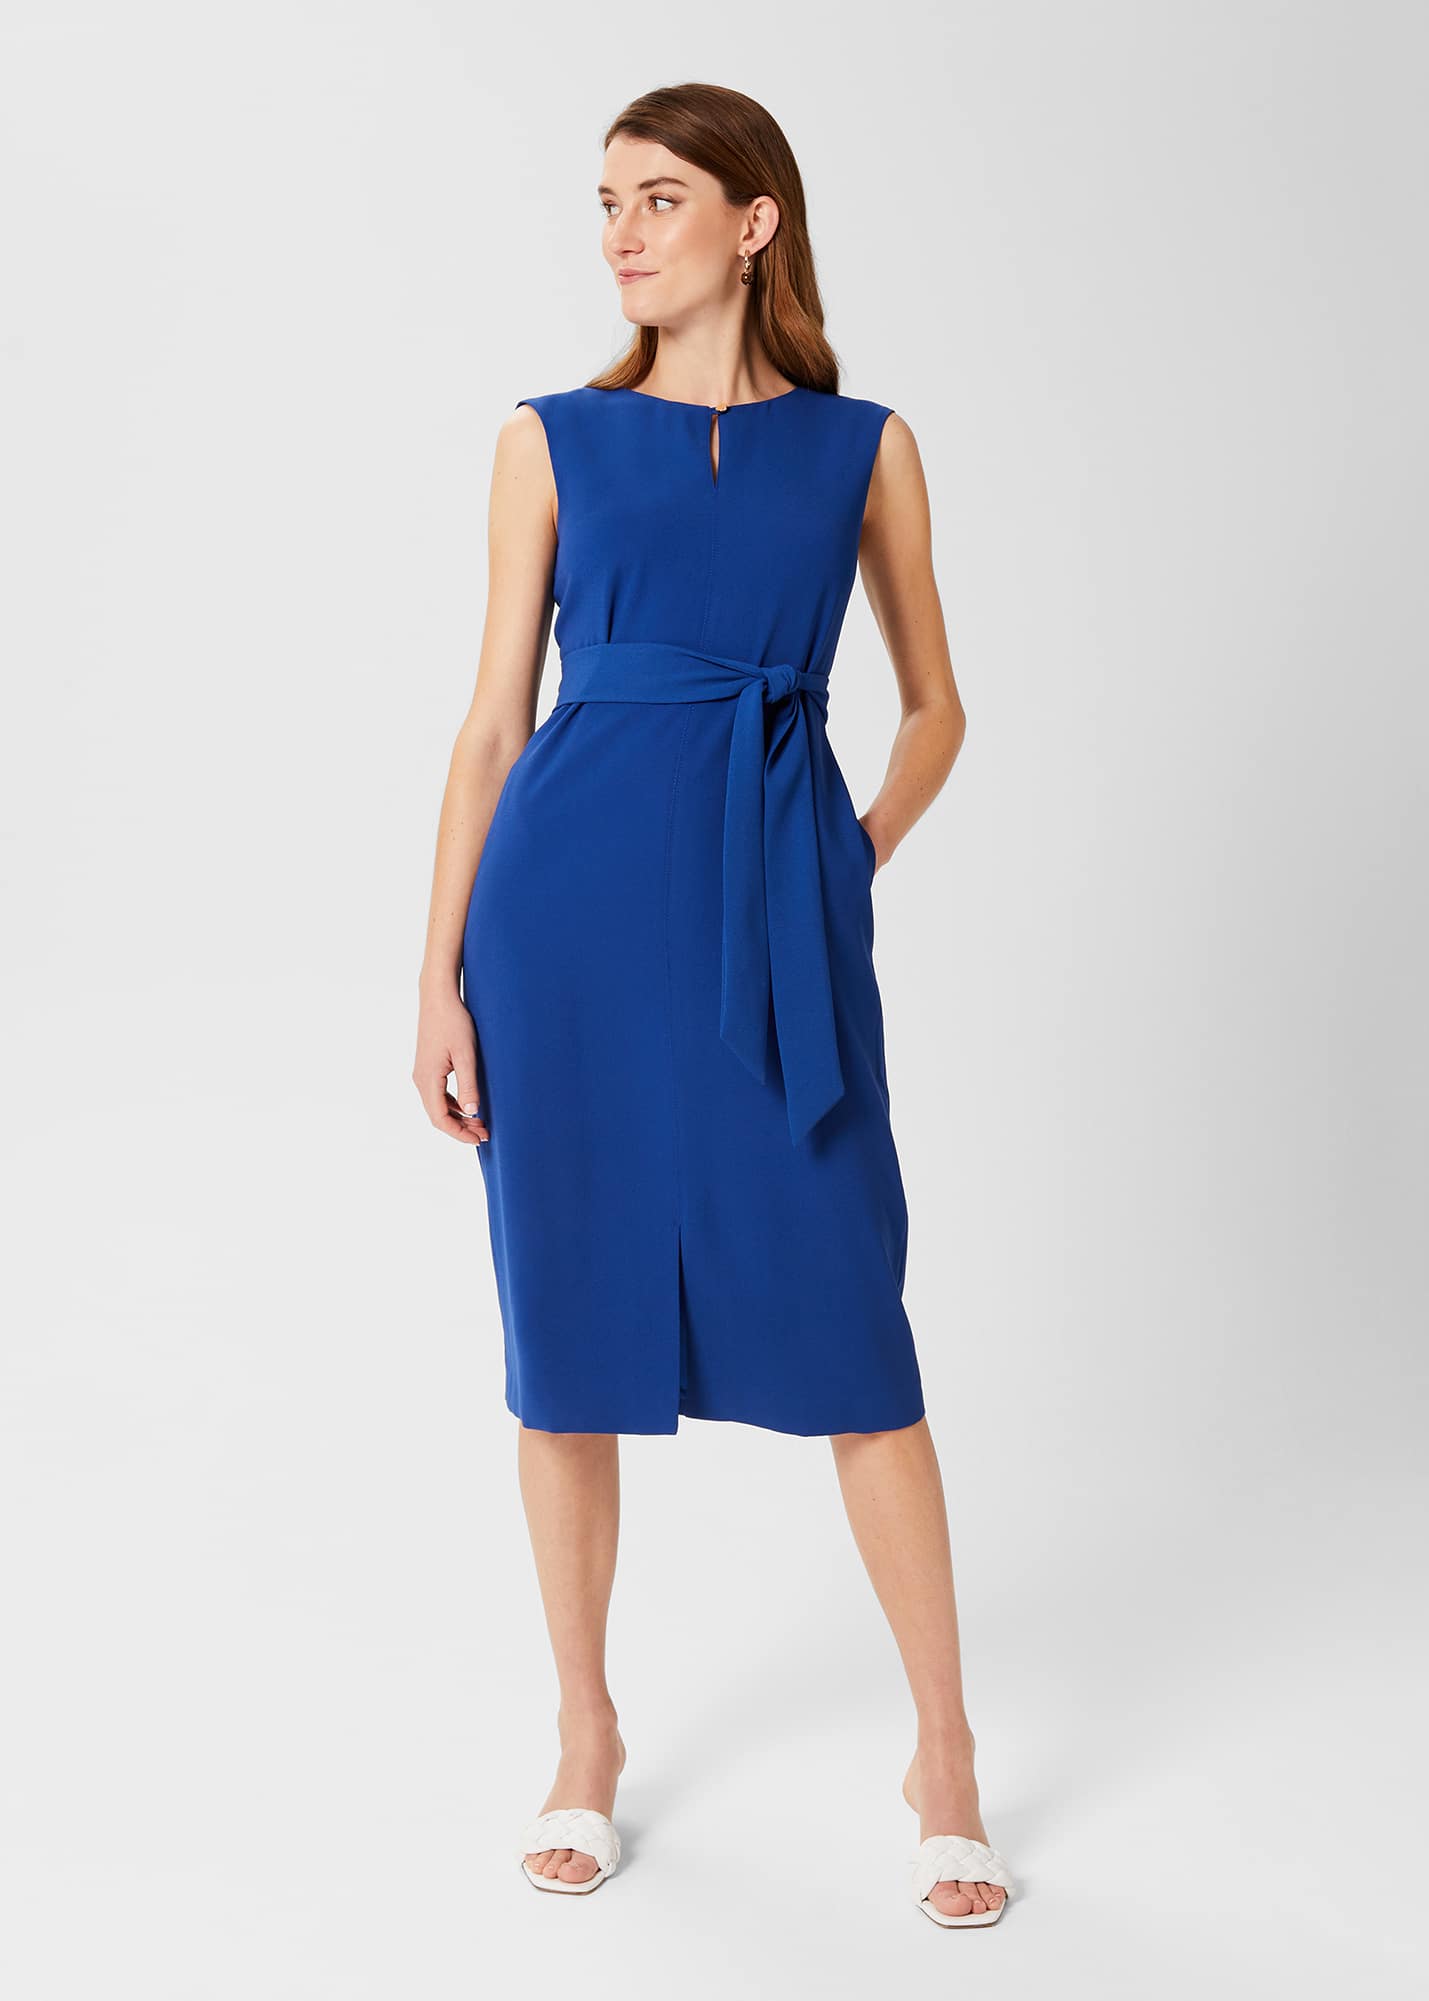 Hobbs Women's Kristen Belted Dress - Royal Blue